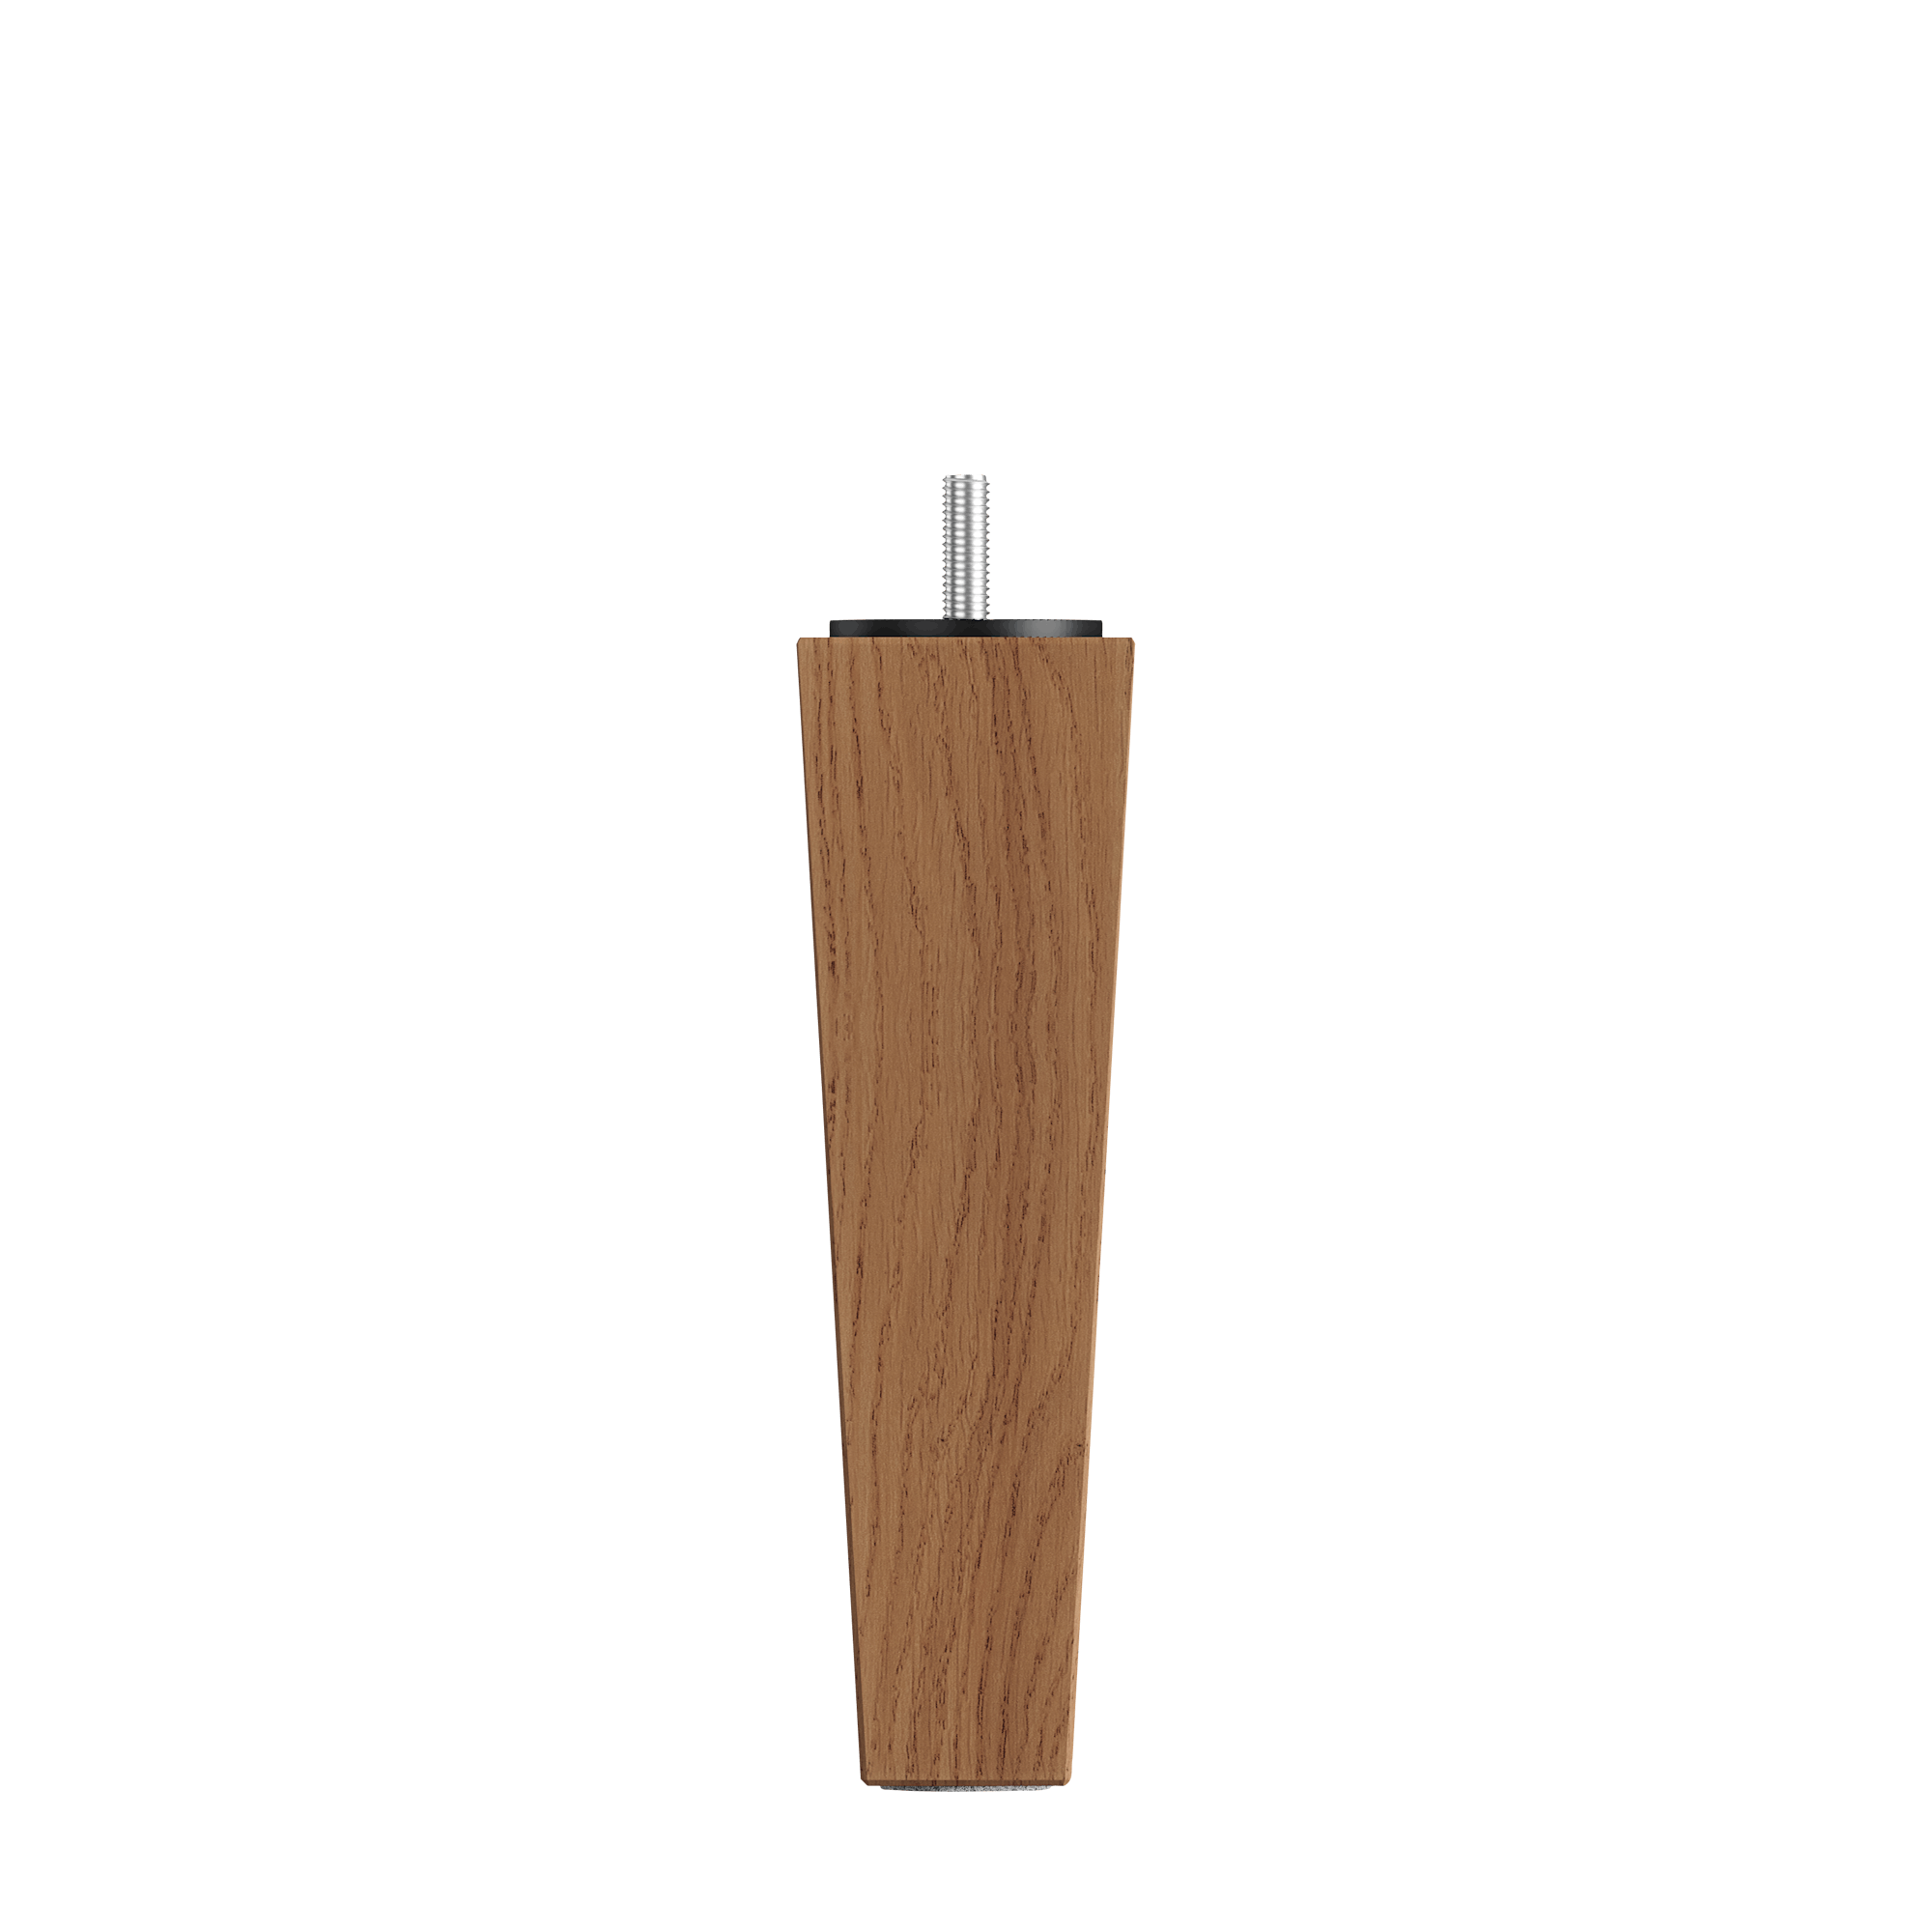 Leg Product Coned 18cm Wood v02